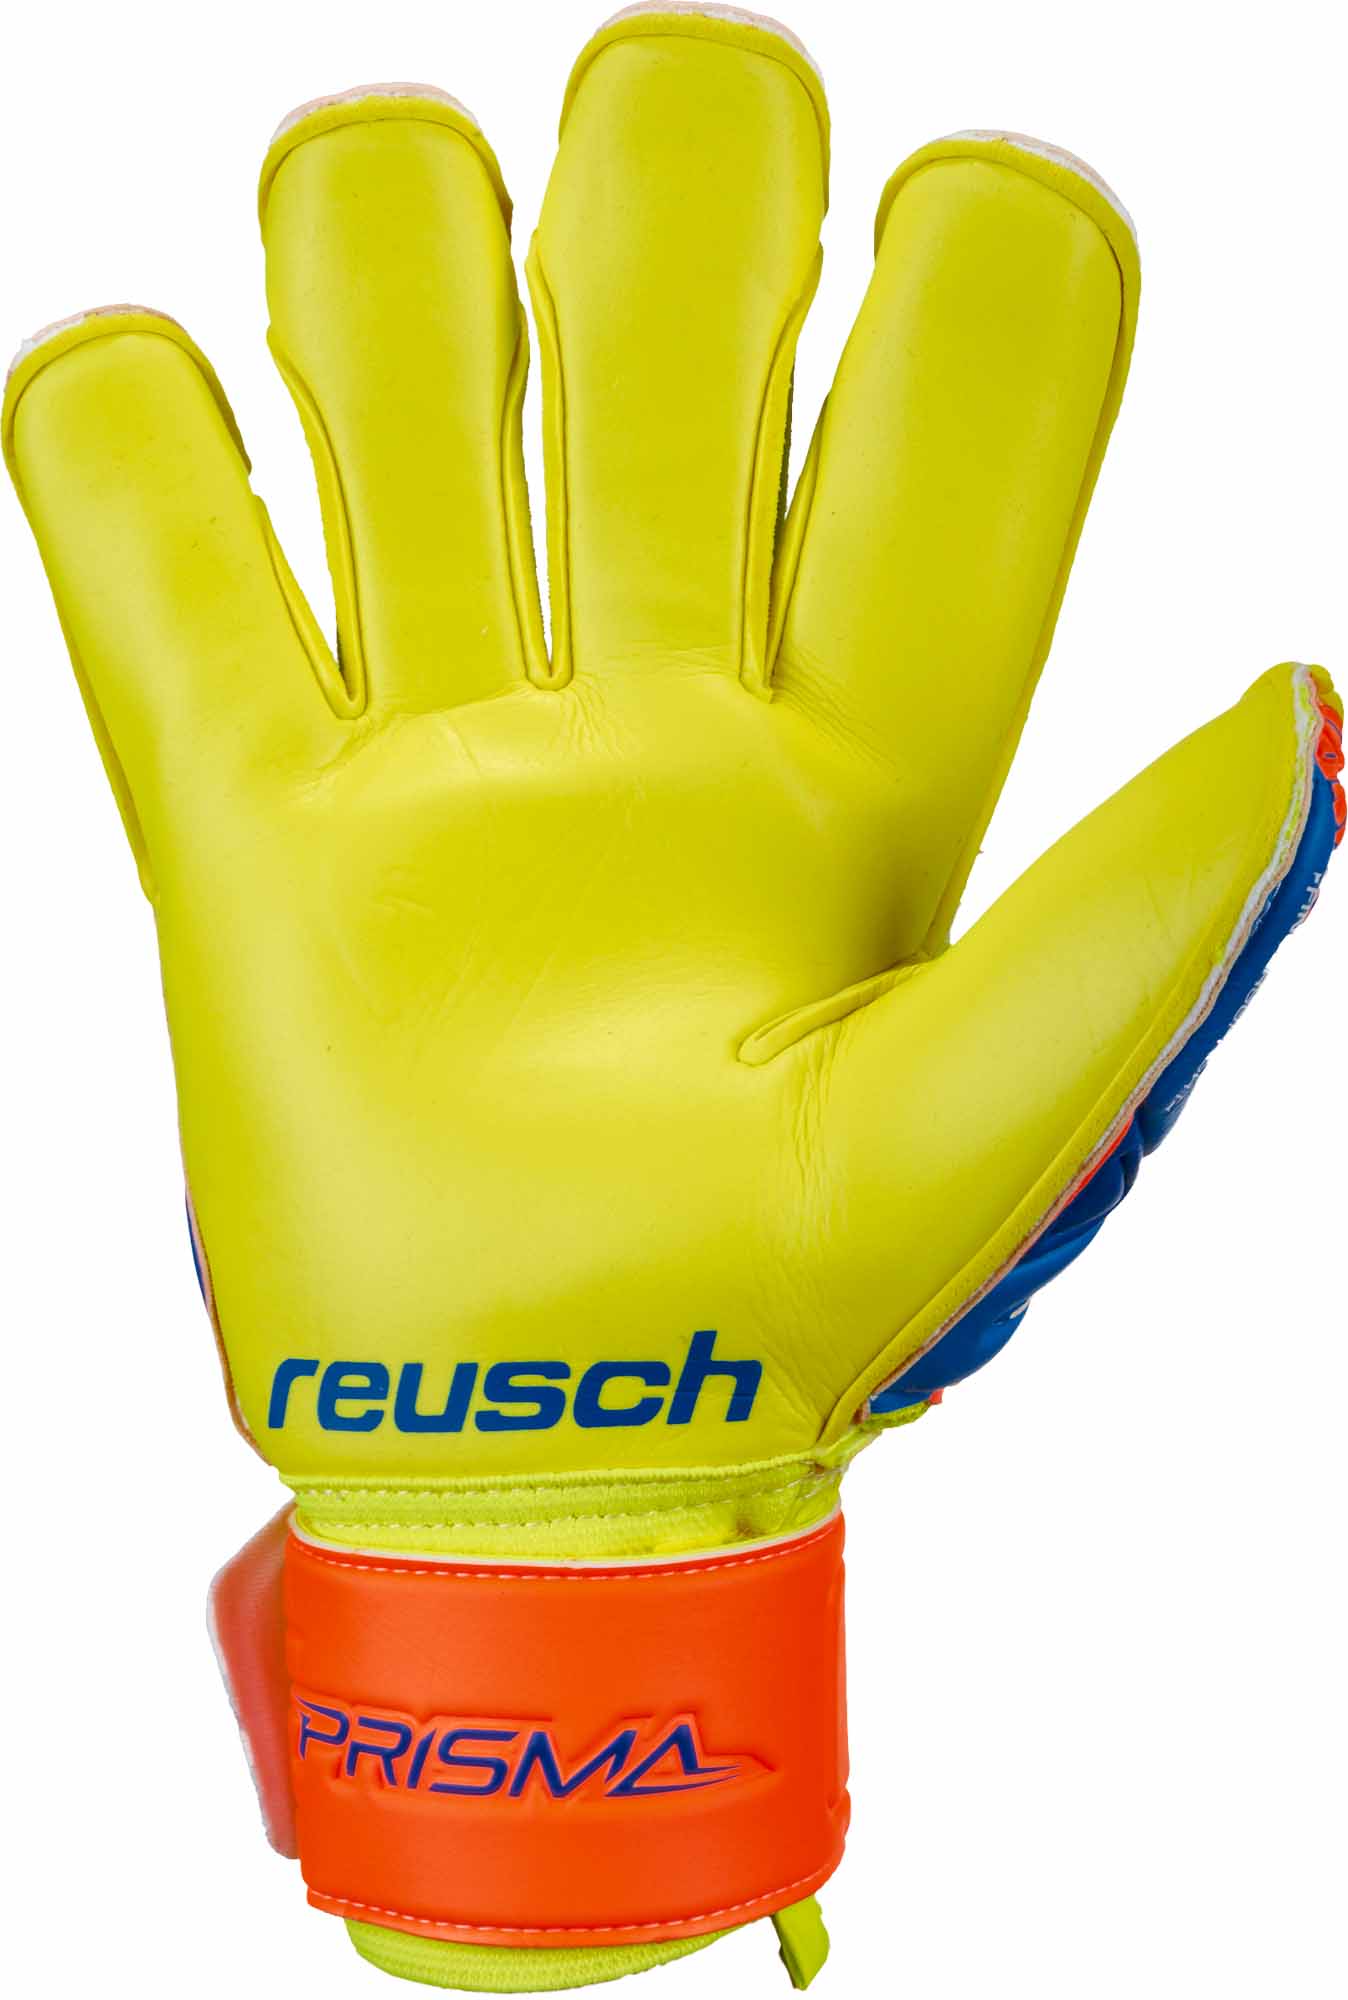 Reusch Soccer Goalie Gloves RE:CEPTOR Prime S1 3570201S Blue&Yellow SZ 9 SAMPLE 